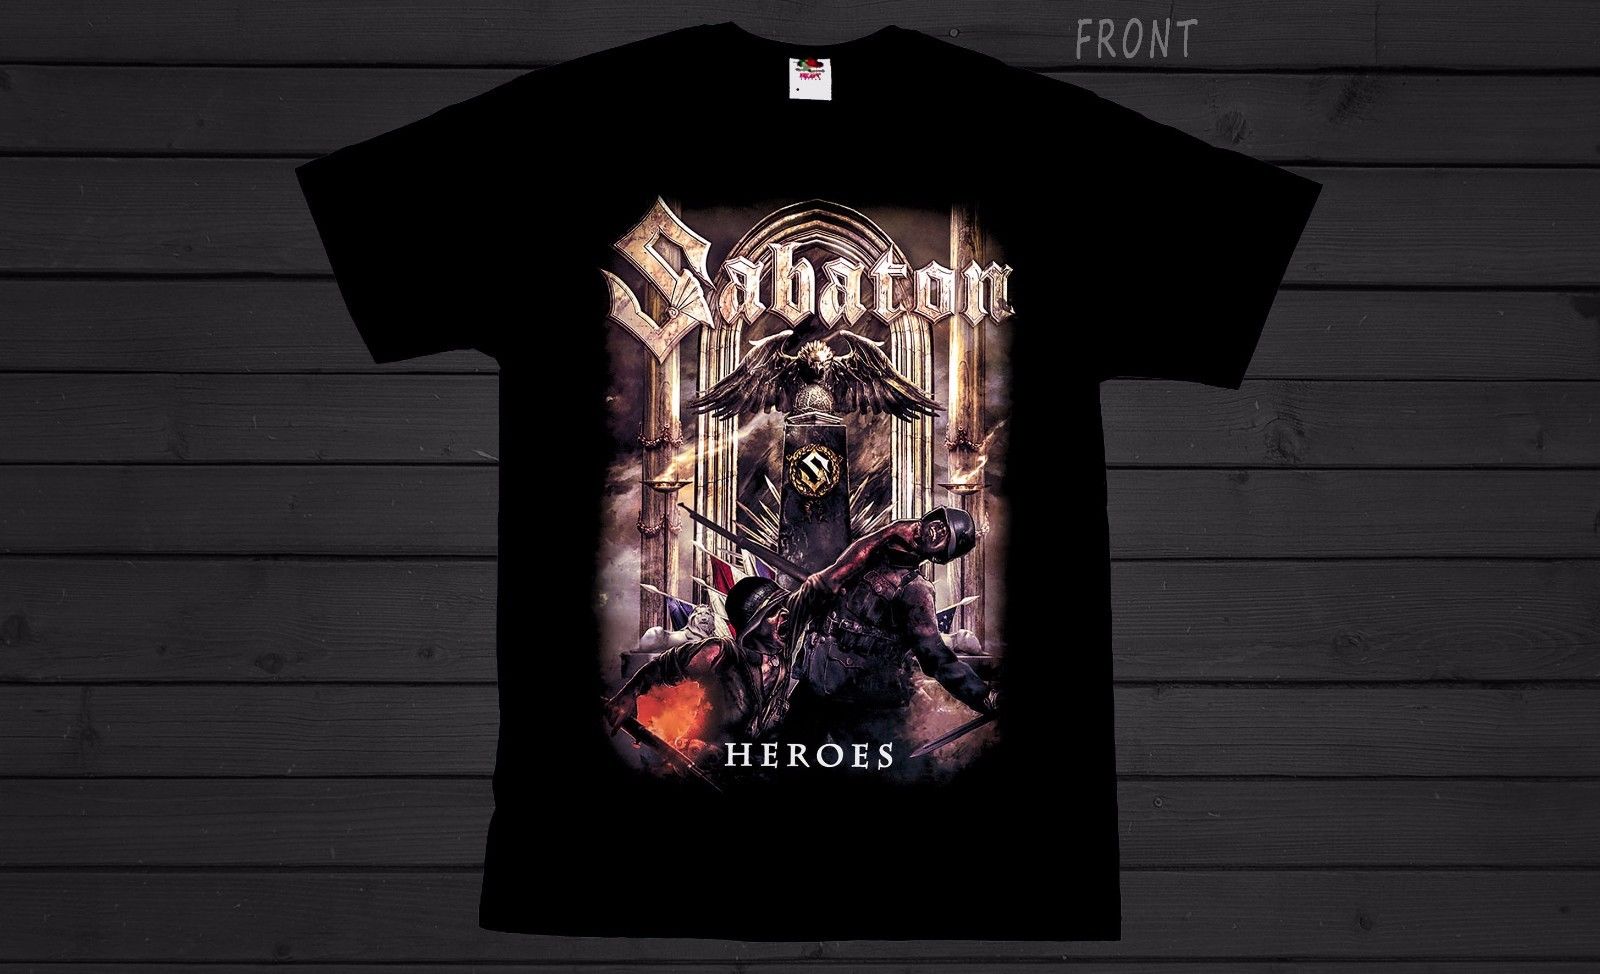 Lionel Green Street Consecutive dump SABATON - Heroes - Swedish Heavy Metal Band T-Shirt - SquadTee.com